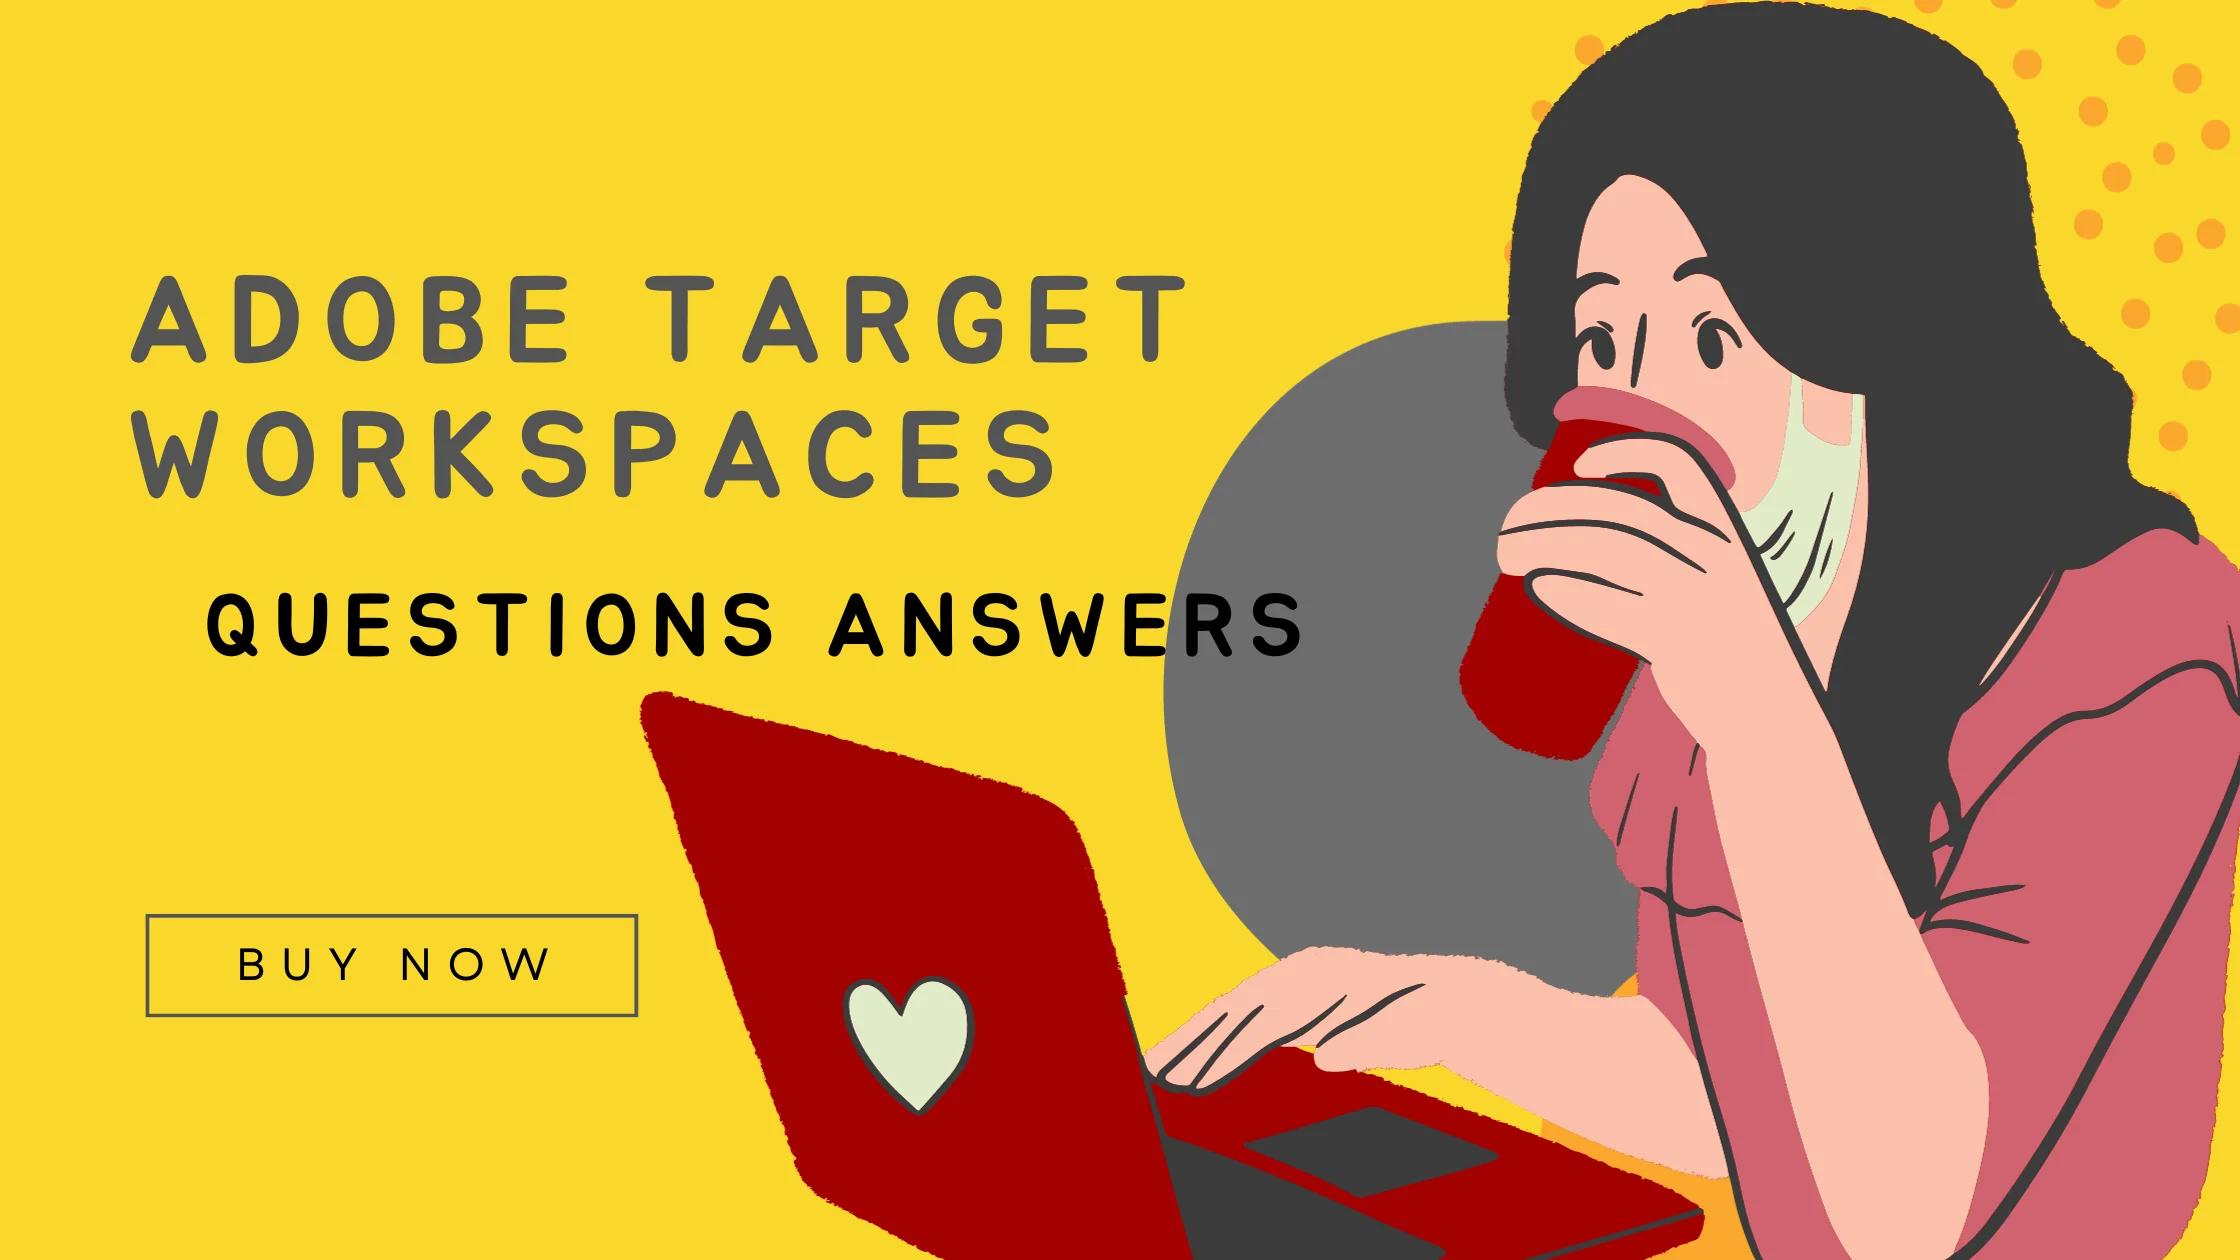 Adobe Target Workspaces promotion